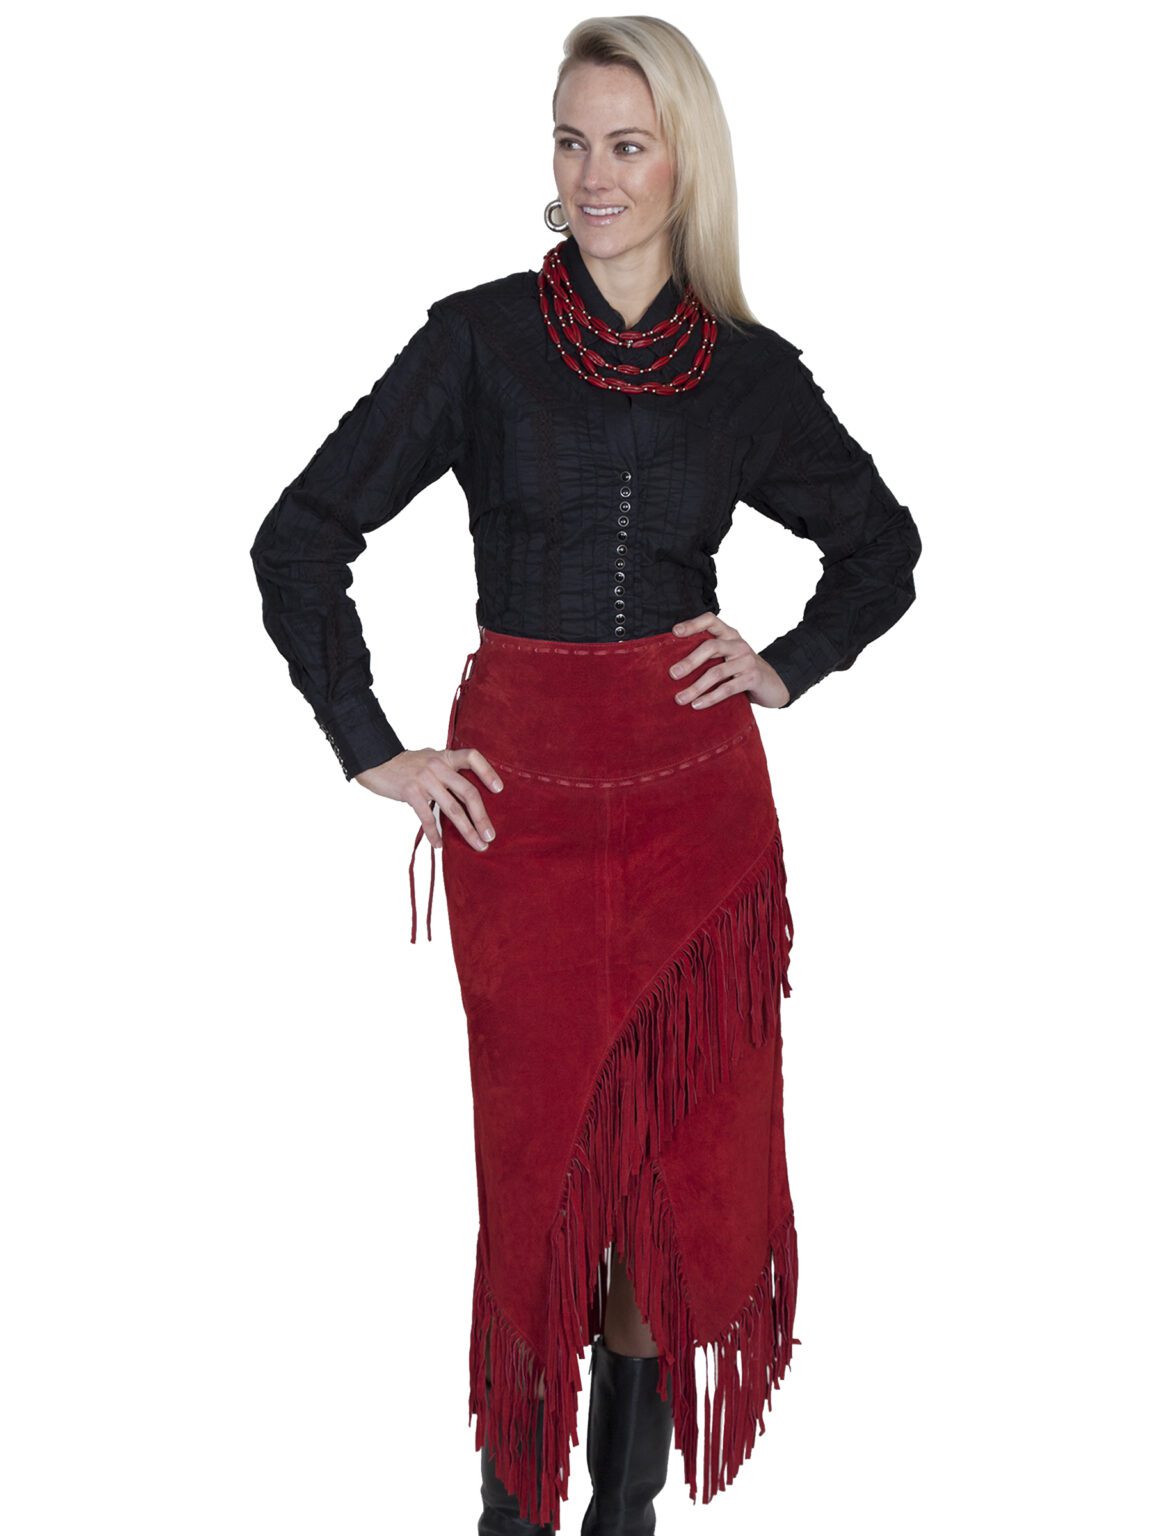 Womens Native Long Red Fringe Skirt Product Image